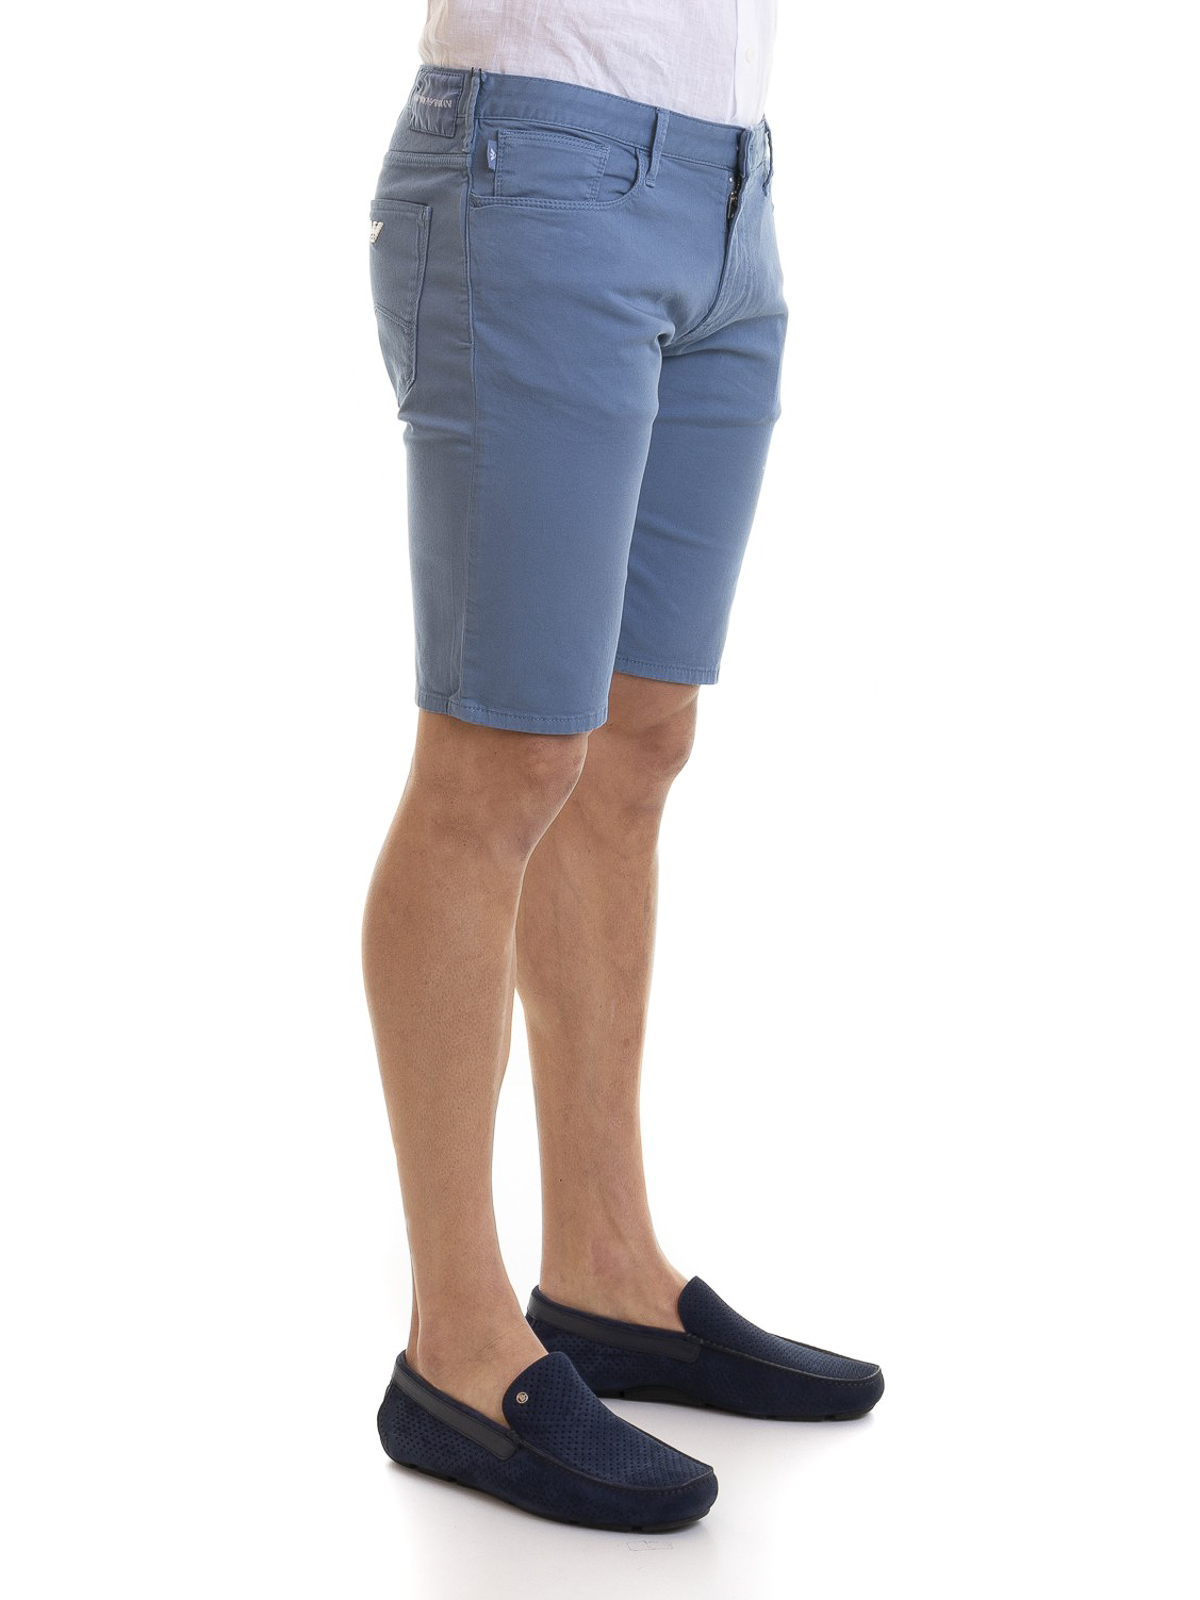 gelei Demon Roeispaan Trousers Shorts Emporio Armani - Light blue cotton jeans style short pants  - 3G1PA61N4ZZ0947